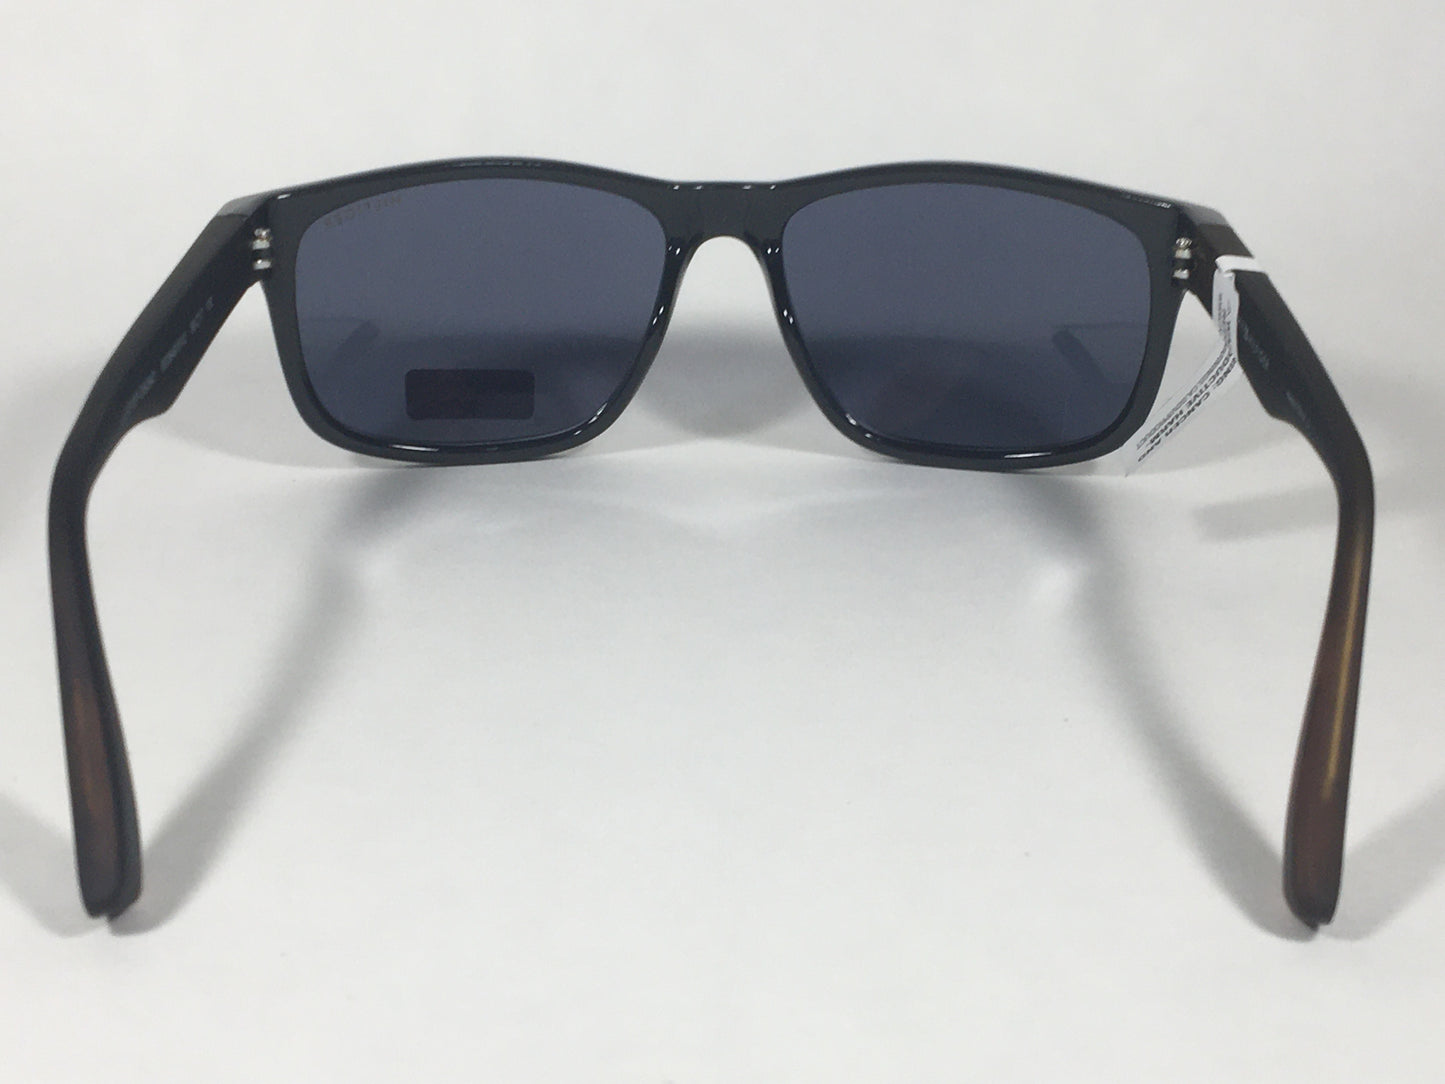 Tommy Hilfiger Luis Rectangular Sunglasses Black And Dark Tortoise Frame Gray Lens LUIS MP OM347 - Sunglasses